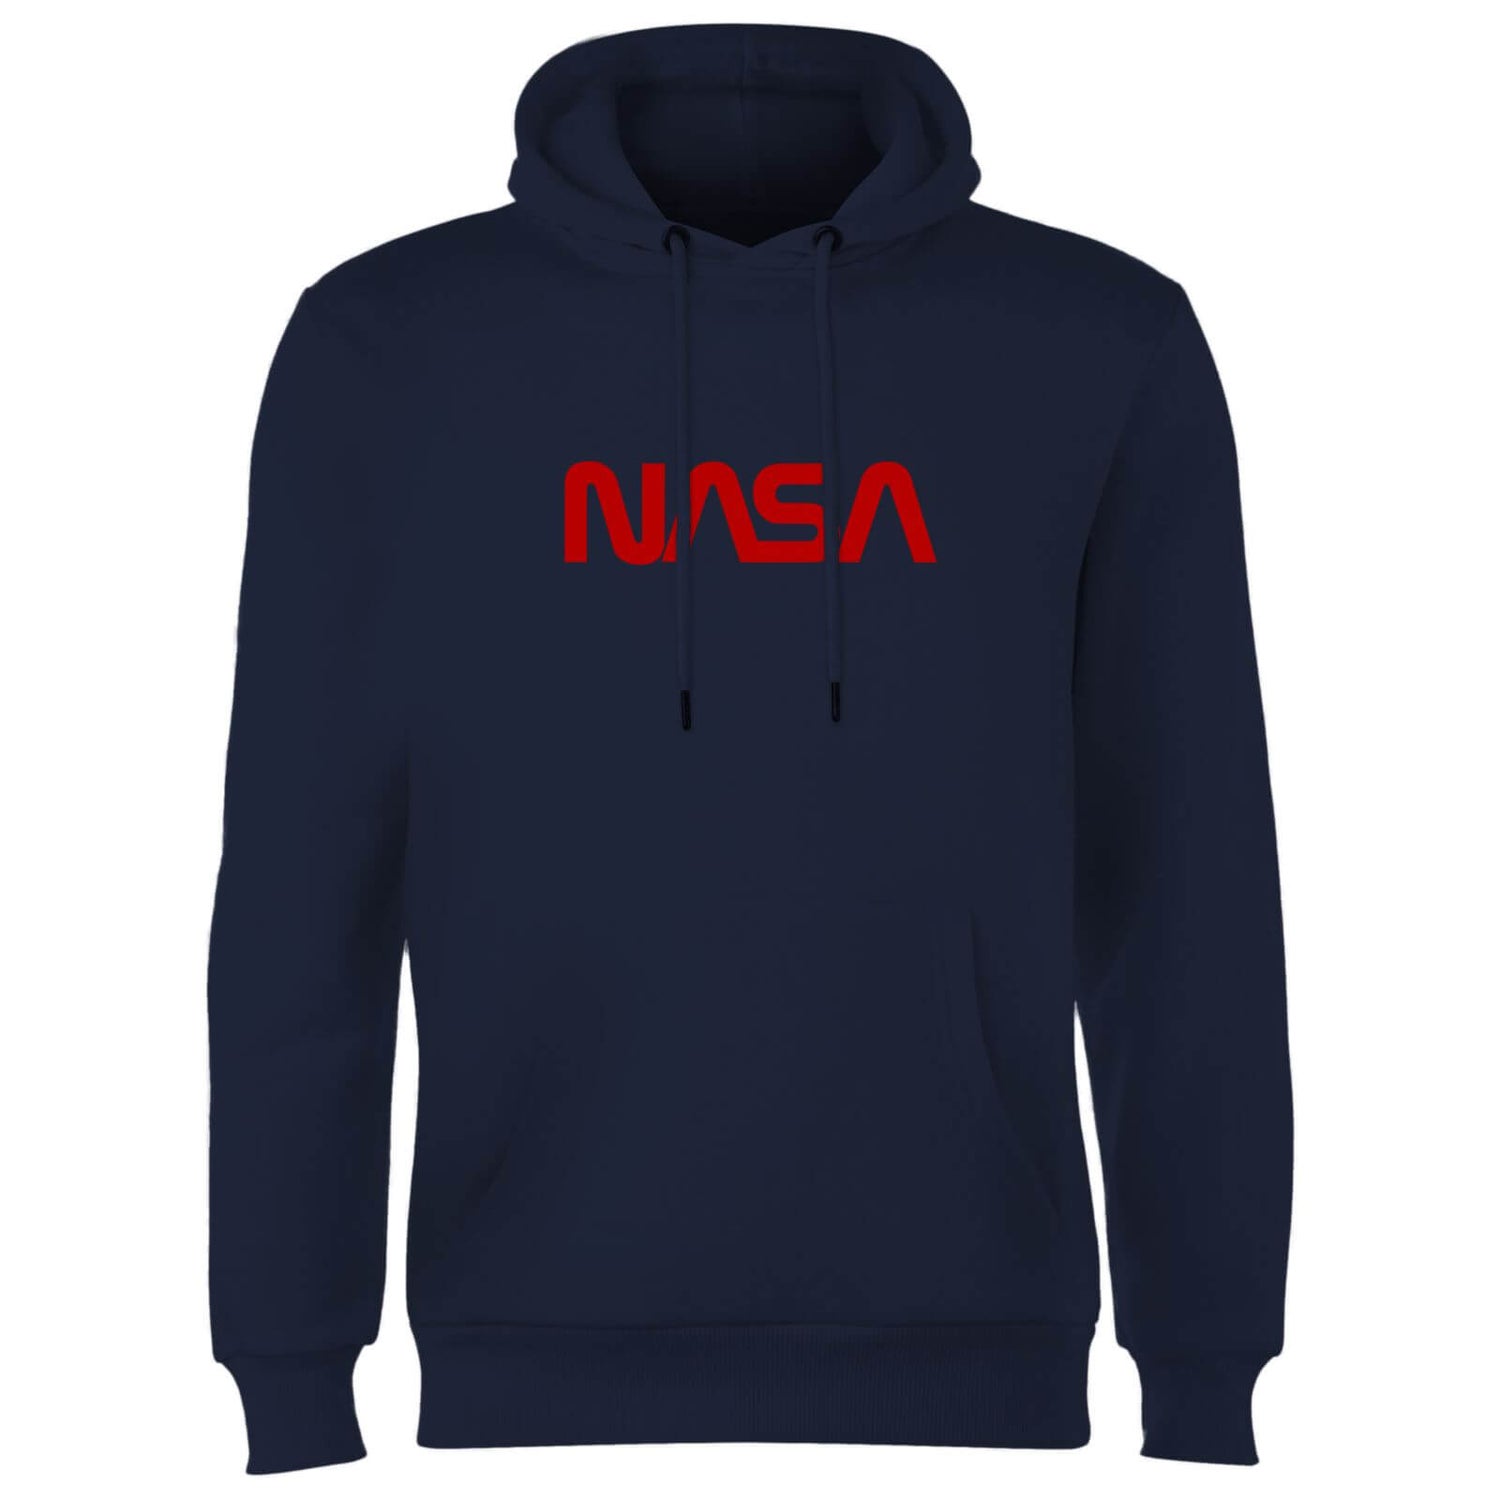 NASA Worm Logotype Hoodie - Navy